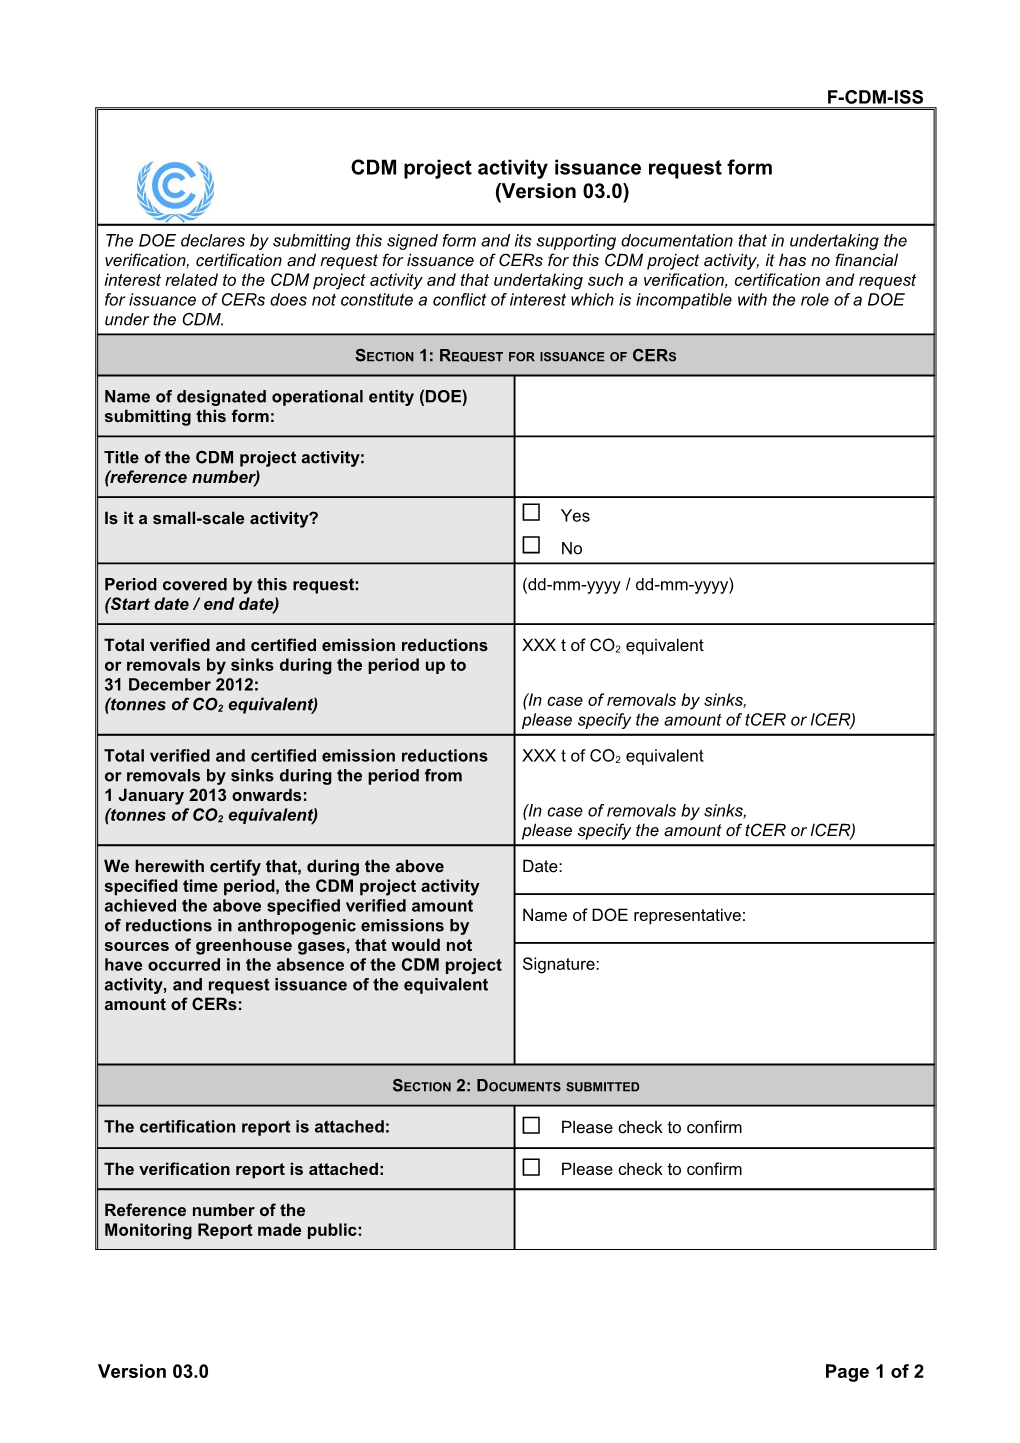 F-CDM-ISS: CDM Project Activit Issuance Request Form. Version 03.0